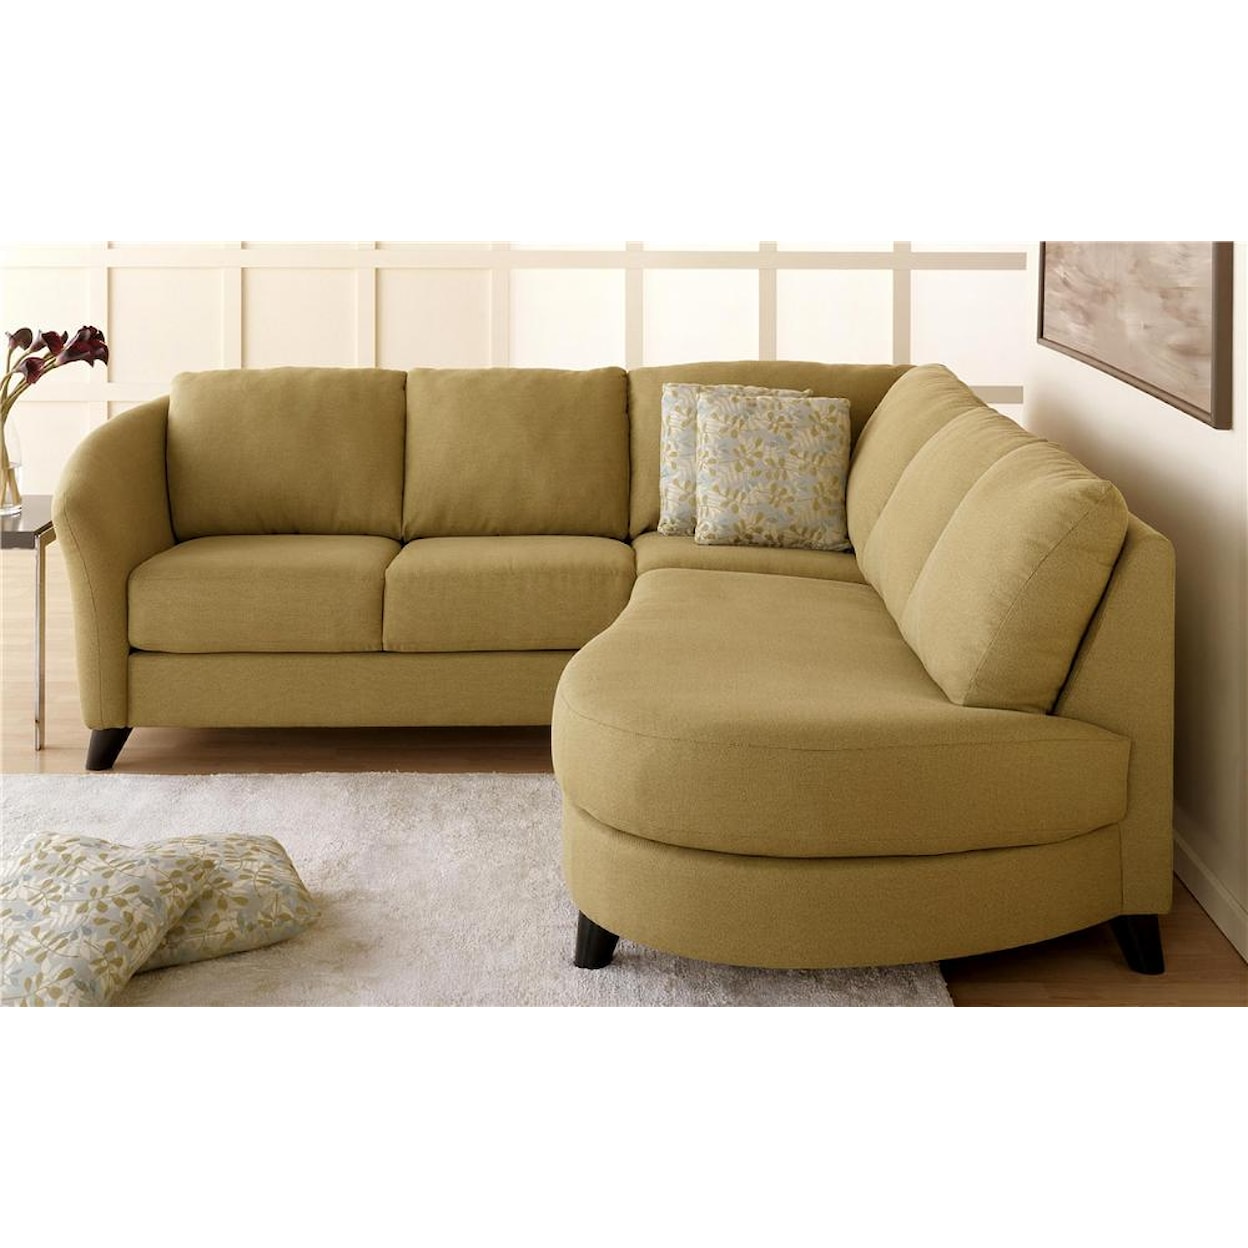 Palliser Alula Sectional Sofa